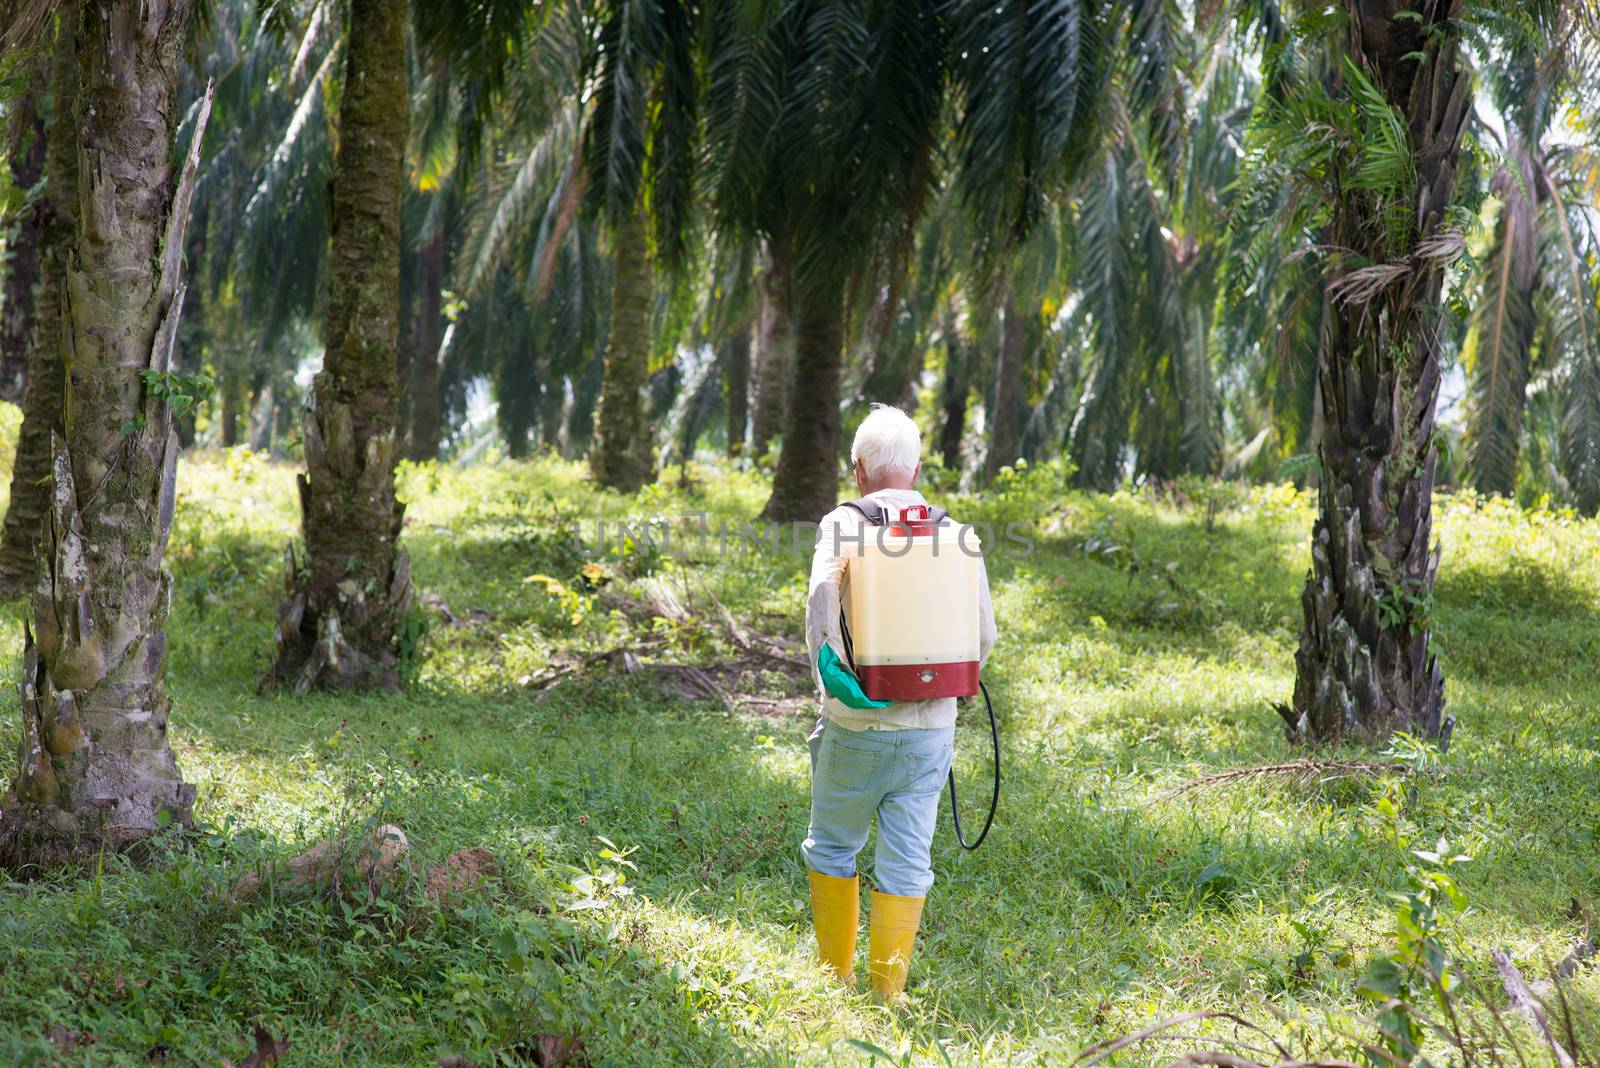 Palm oil worker spraying herbicides at plantation